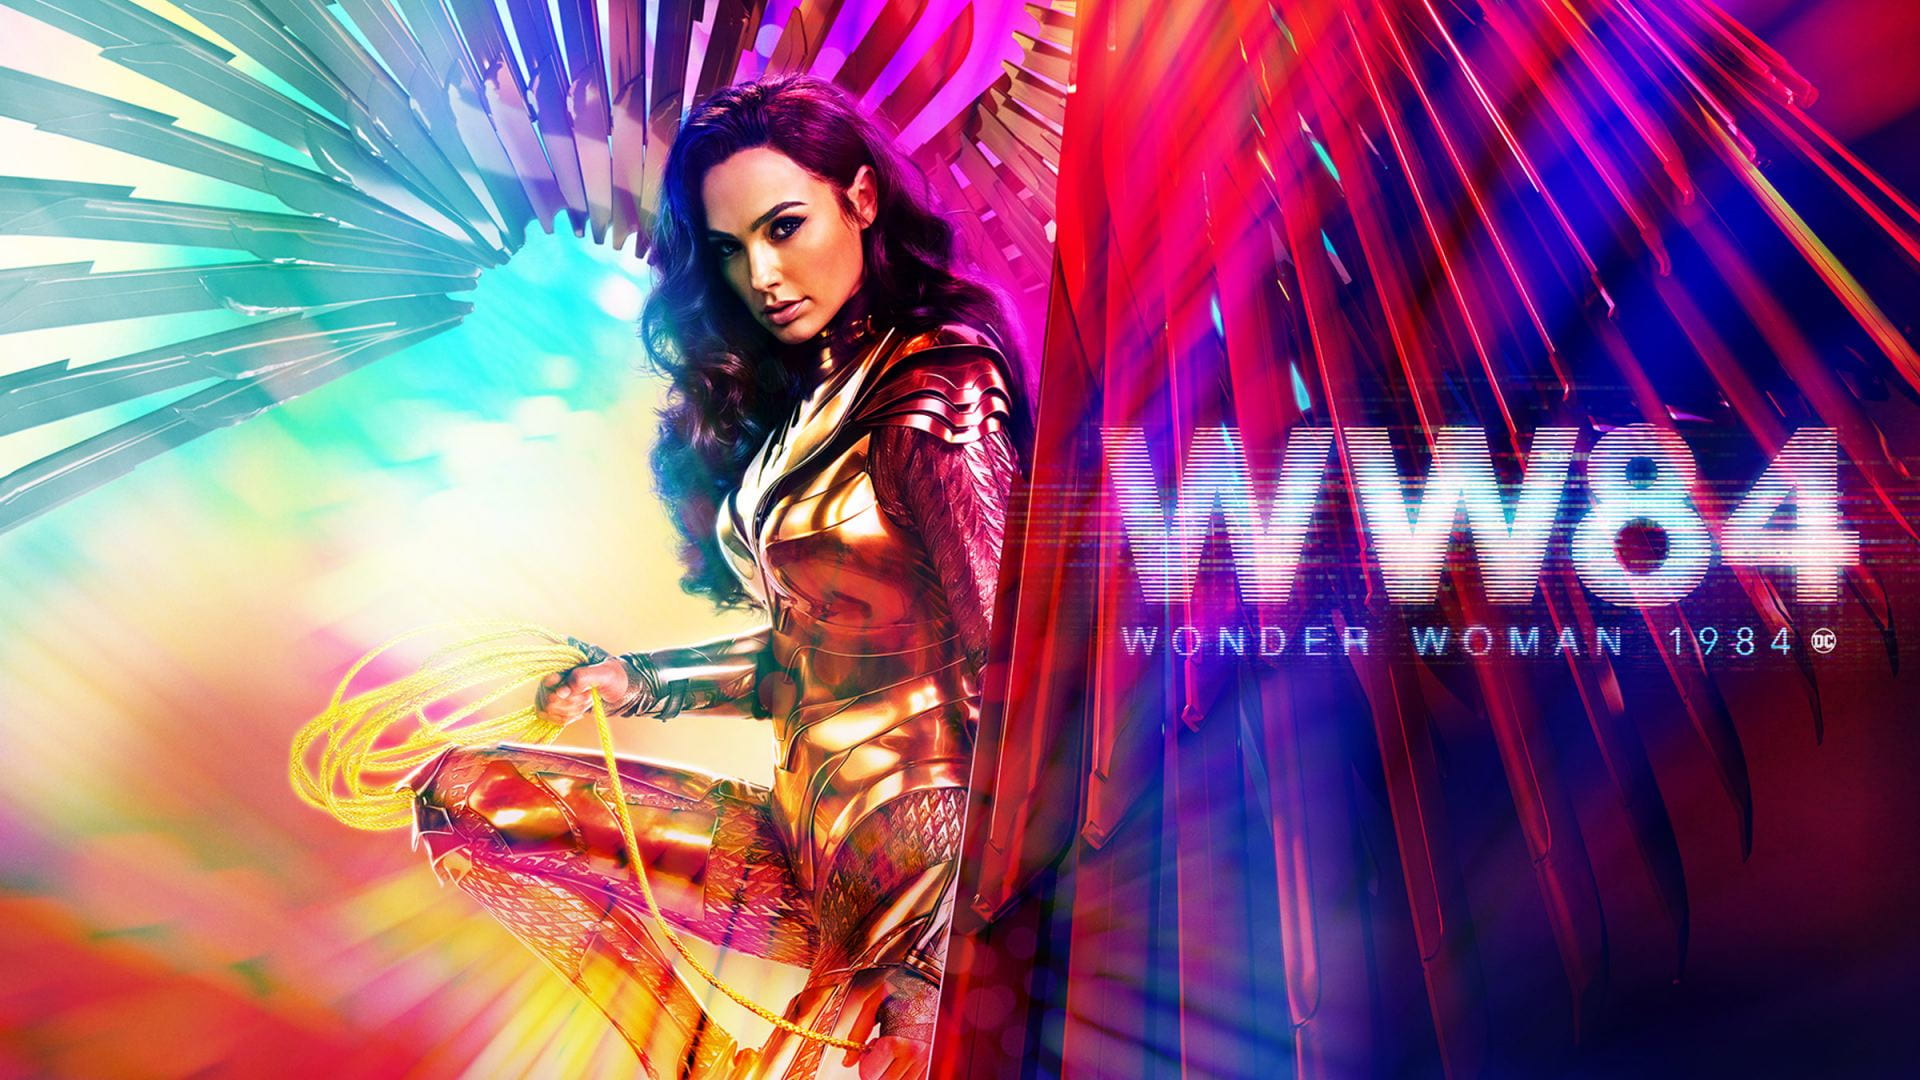  Wonder Woman 1984 (2020) Wonder Woman 1984 è un film del 2020. 